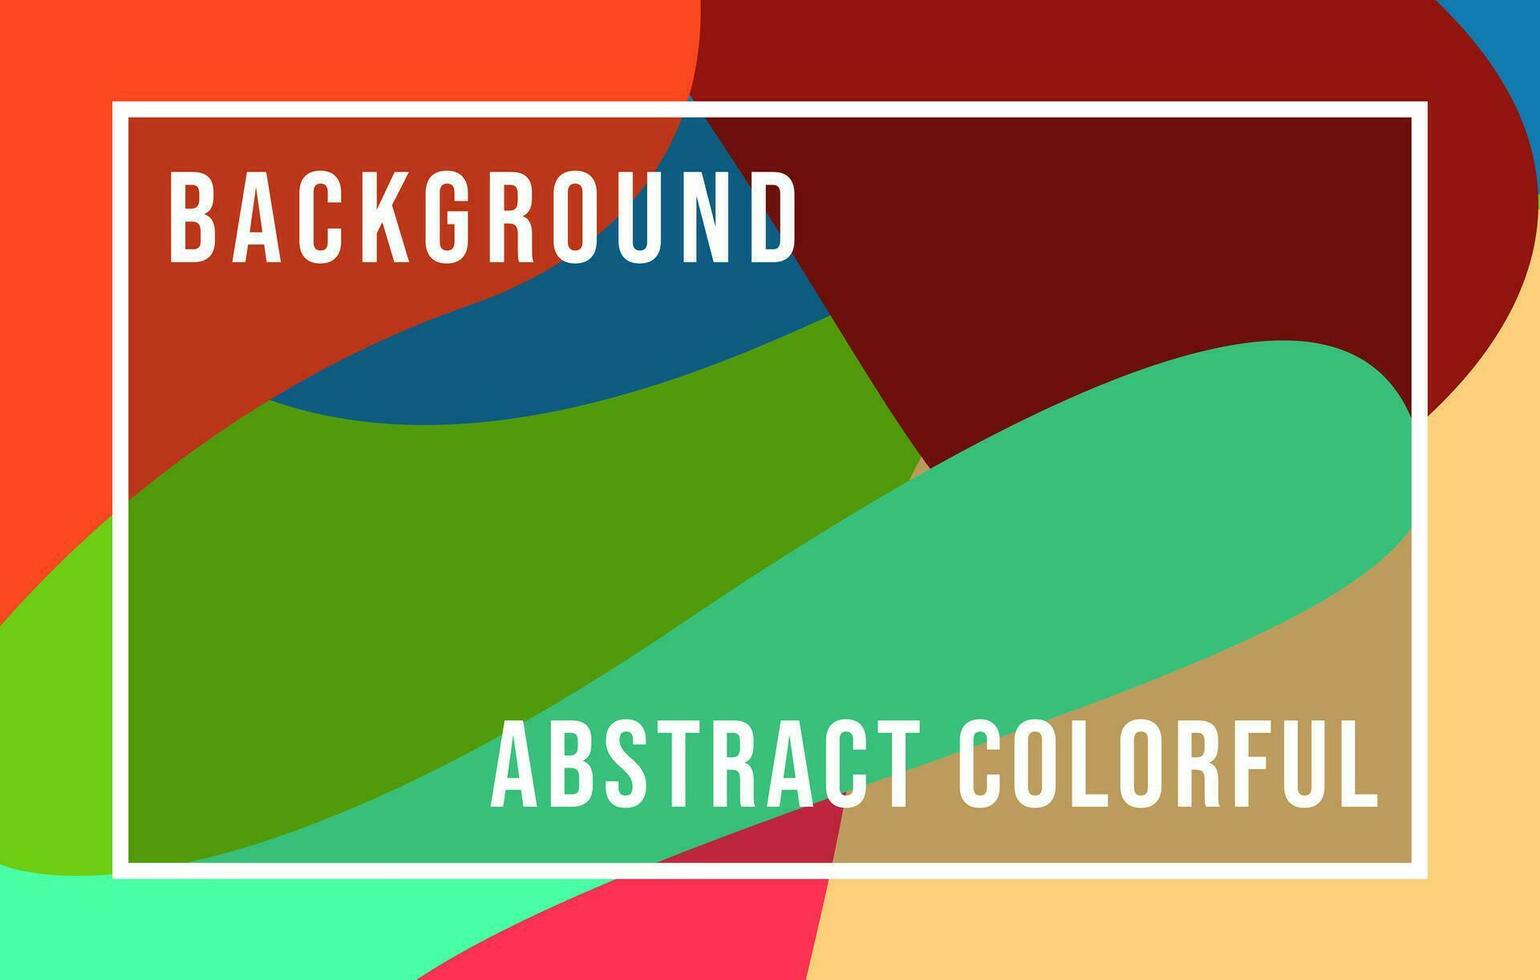 abstract kleurrijk achtergrond, plein grens binnen achtergrond. vector